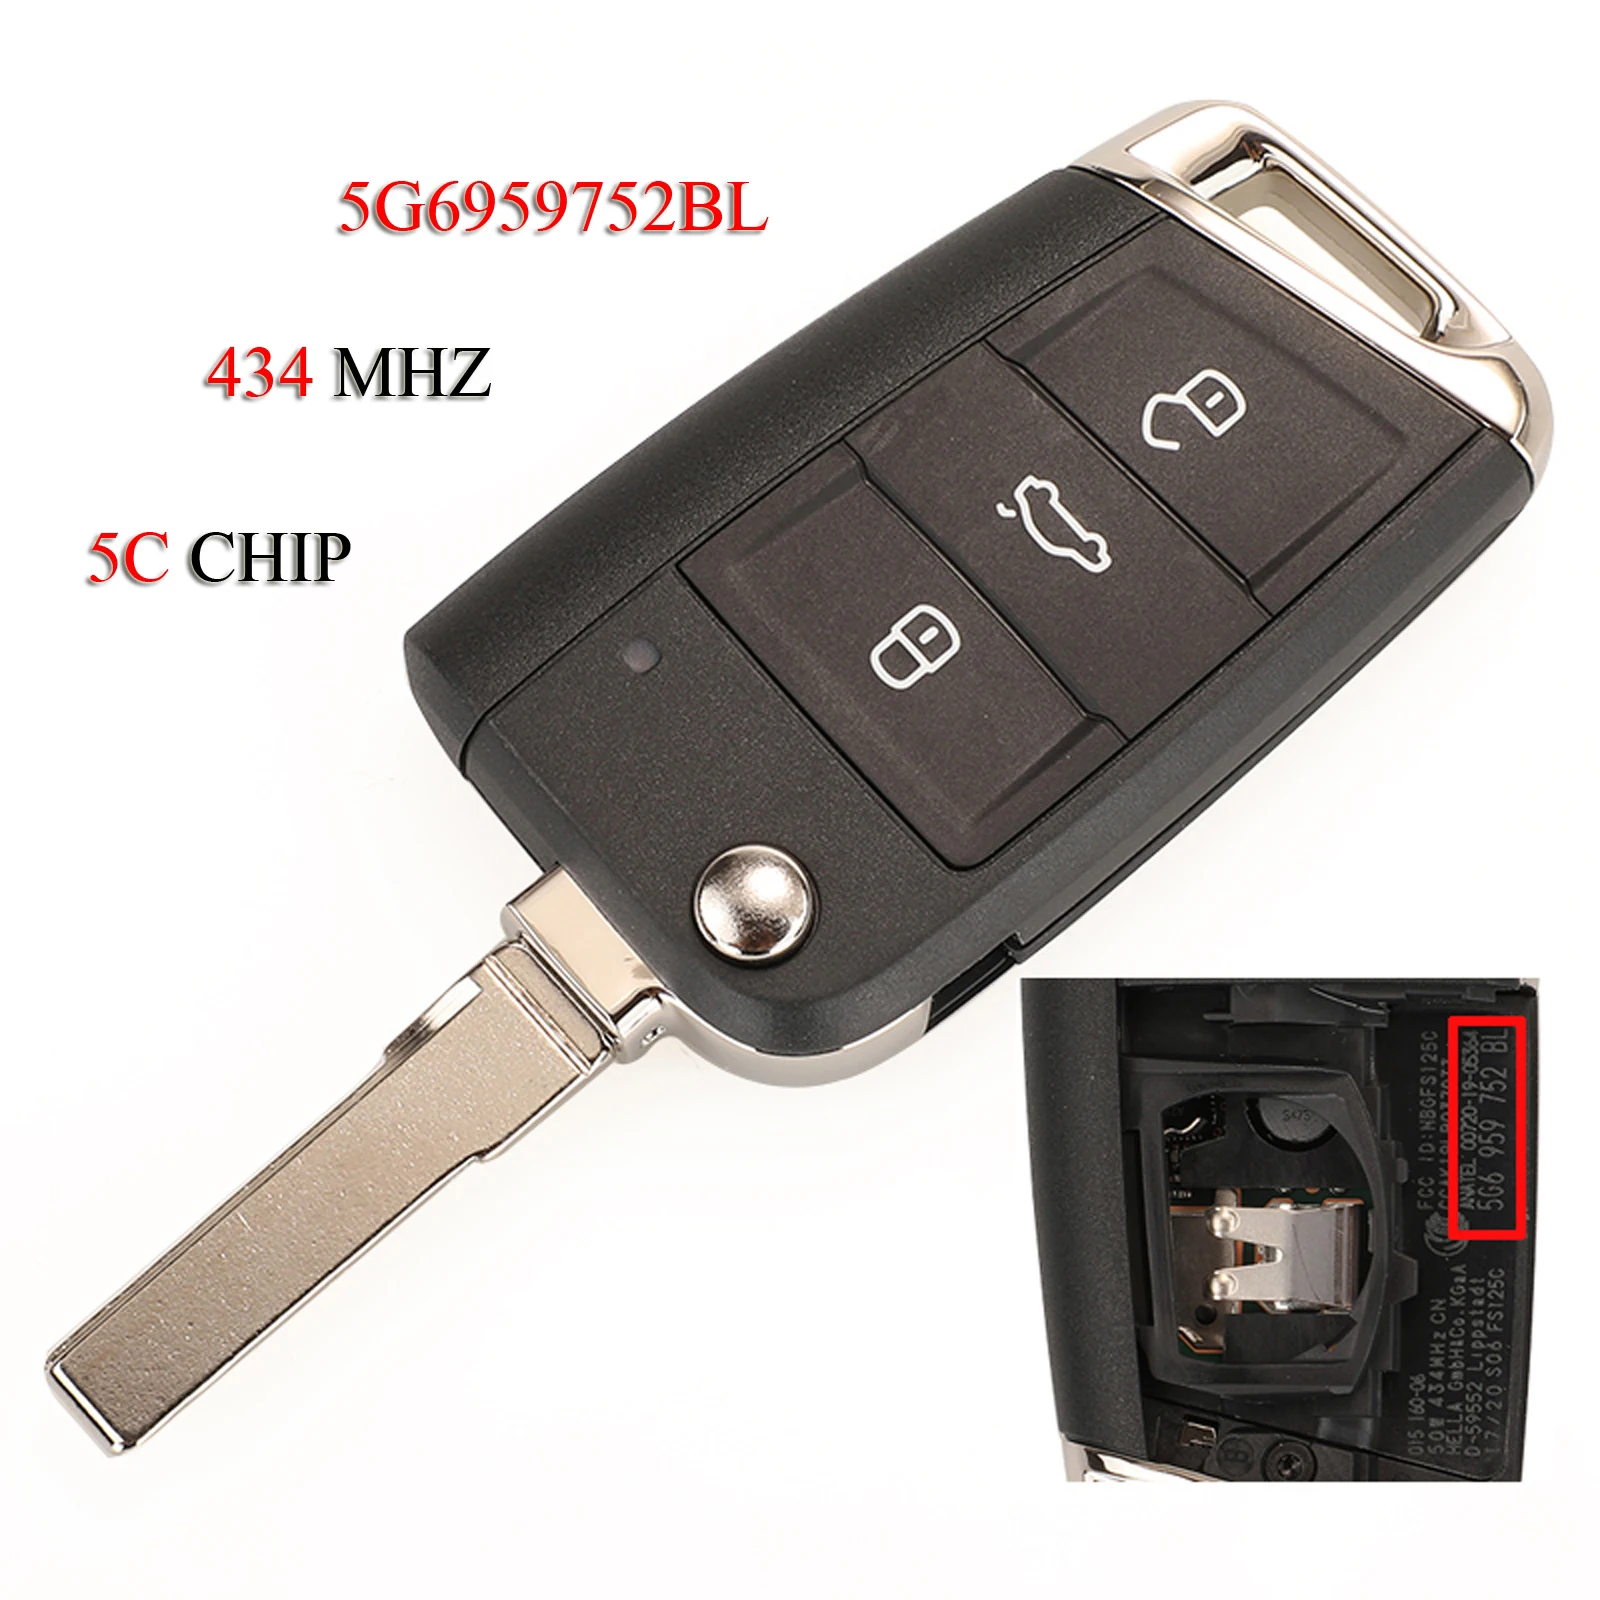 

jingyuqin Keyless-Go Remote Car Key For VW Volkswagan Seat Golf7 MK7 Touran Polo Tiguan 3Buttons 434Mhz 5C Chip 5G6959752BL